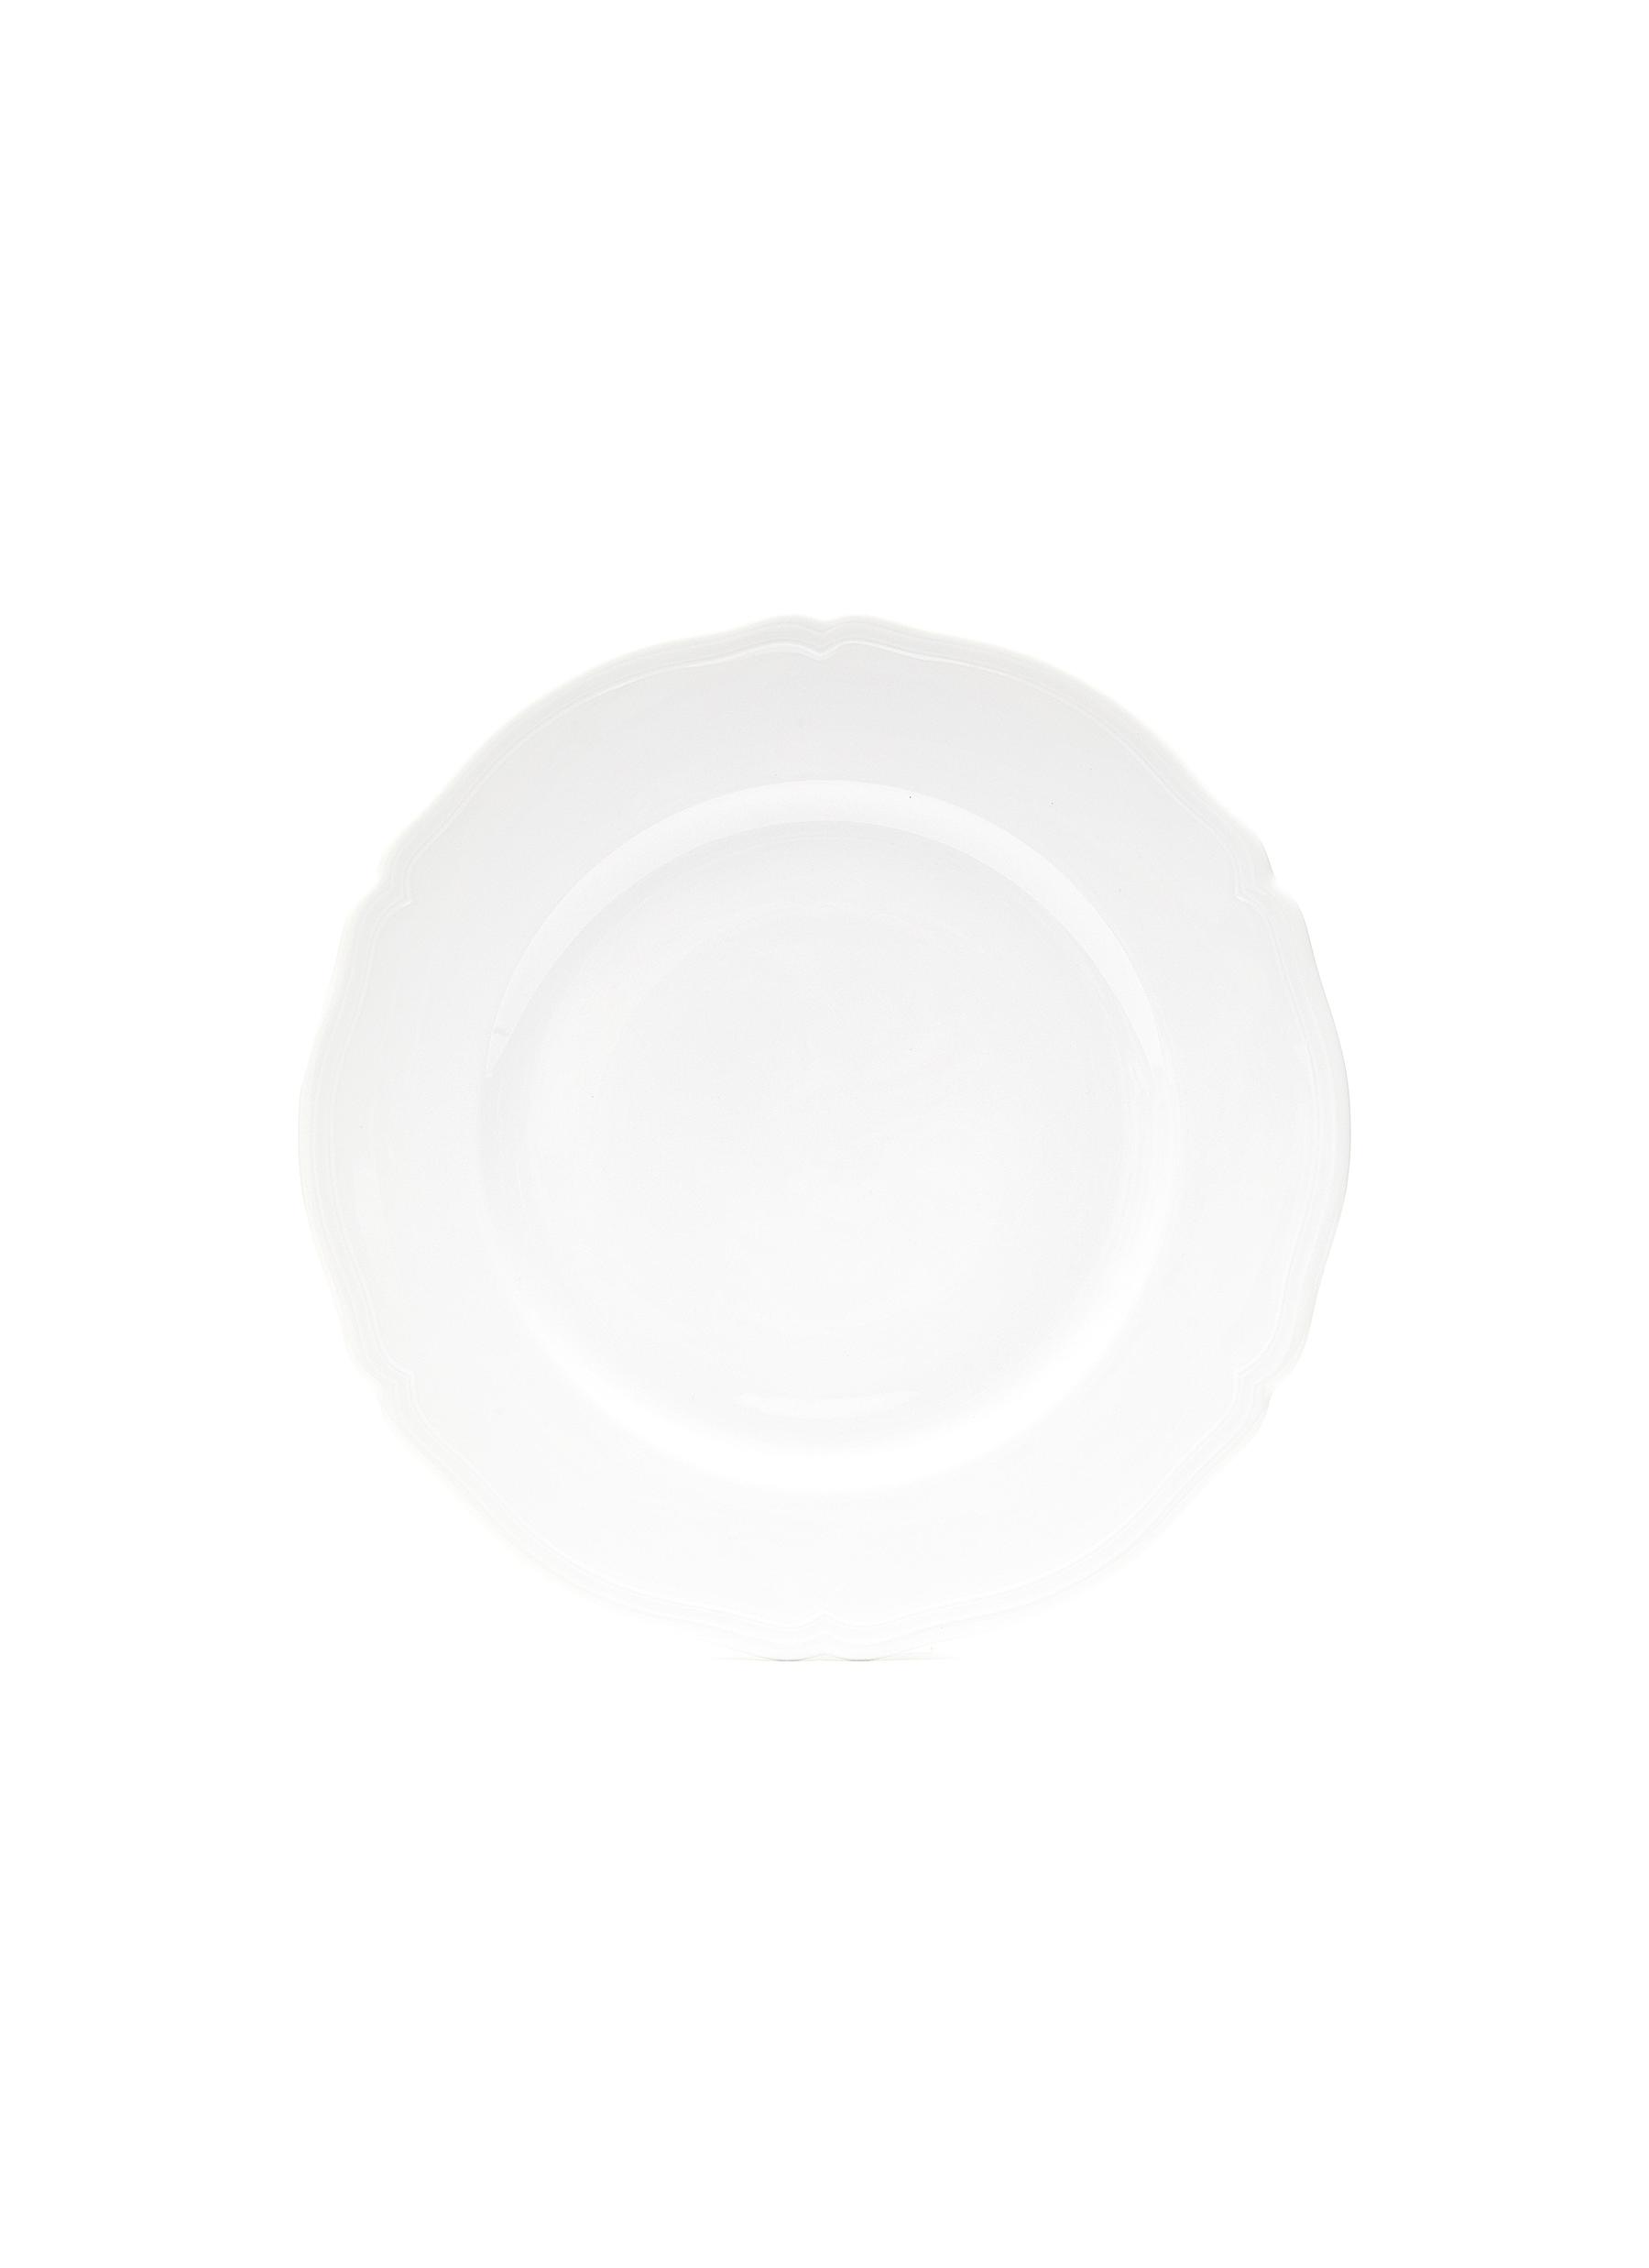 Antico Doccia’ Porcelain Charger Plate